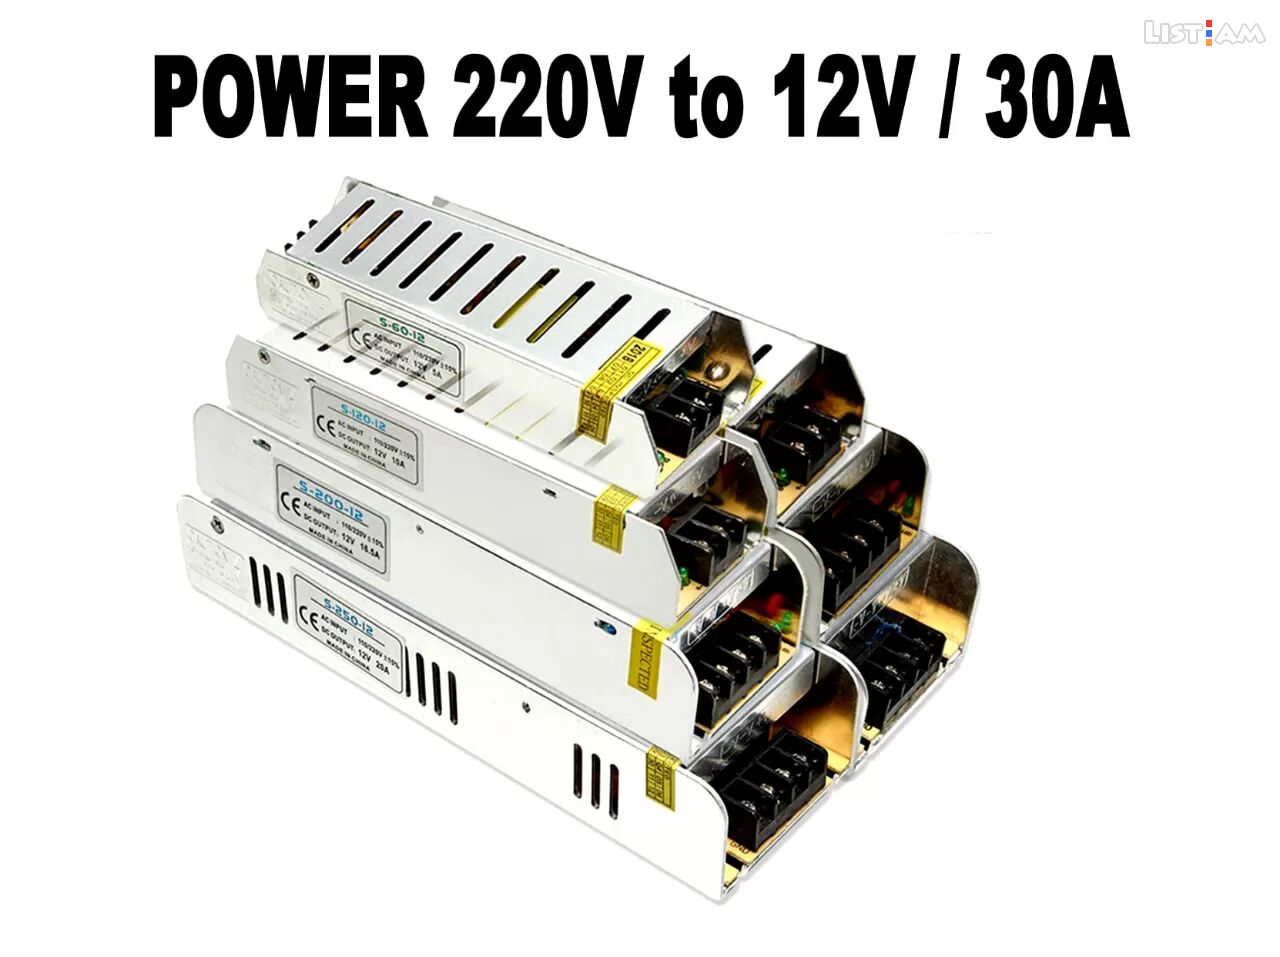 12V 30A Power Supply